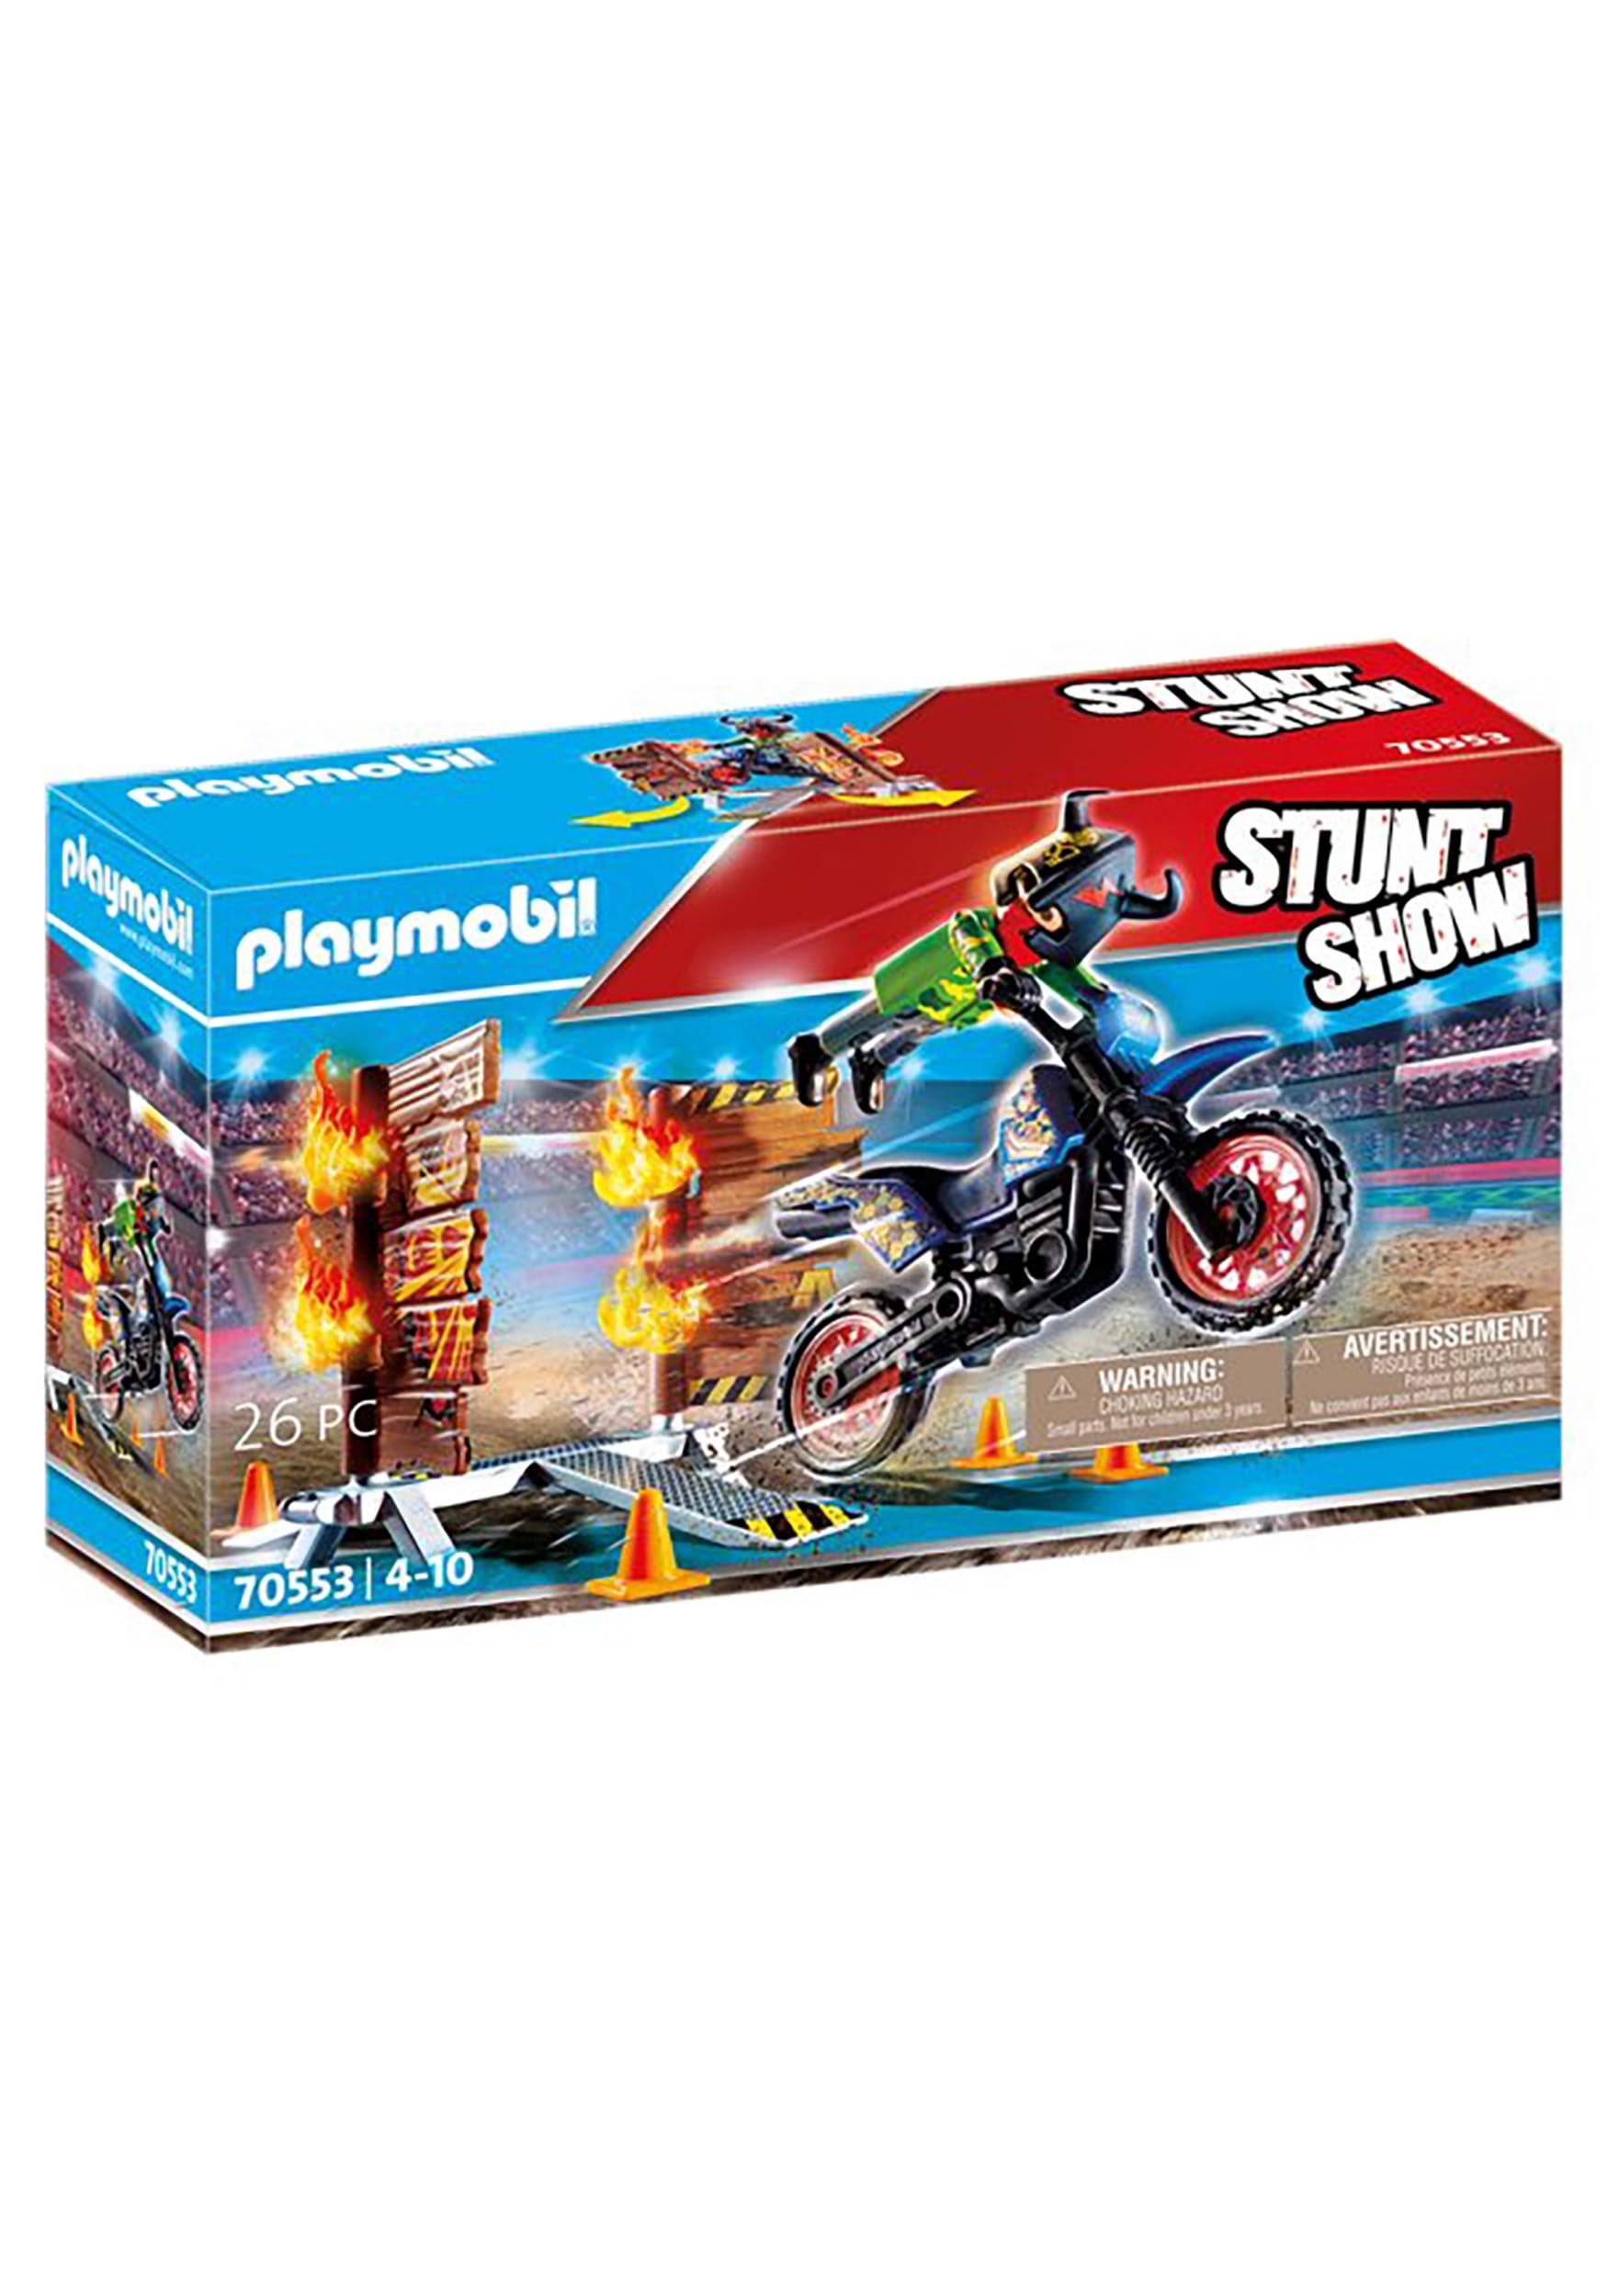 Playmobil Stunt Show Motocross Set